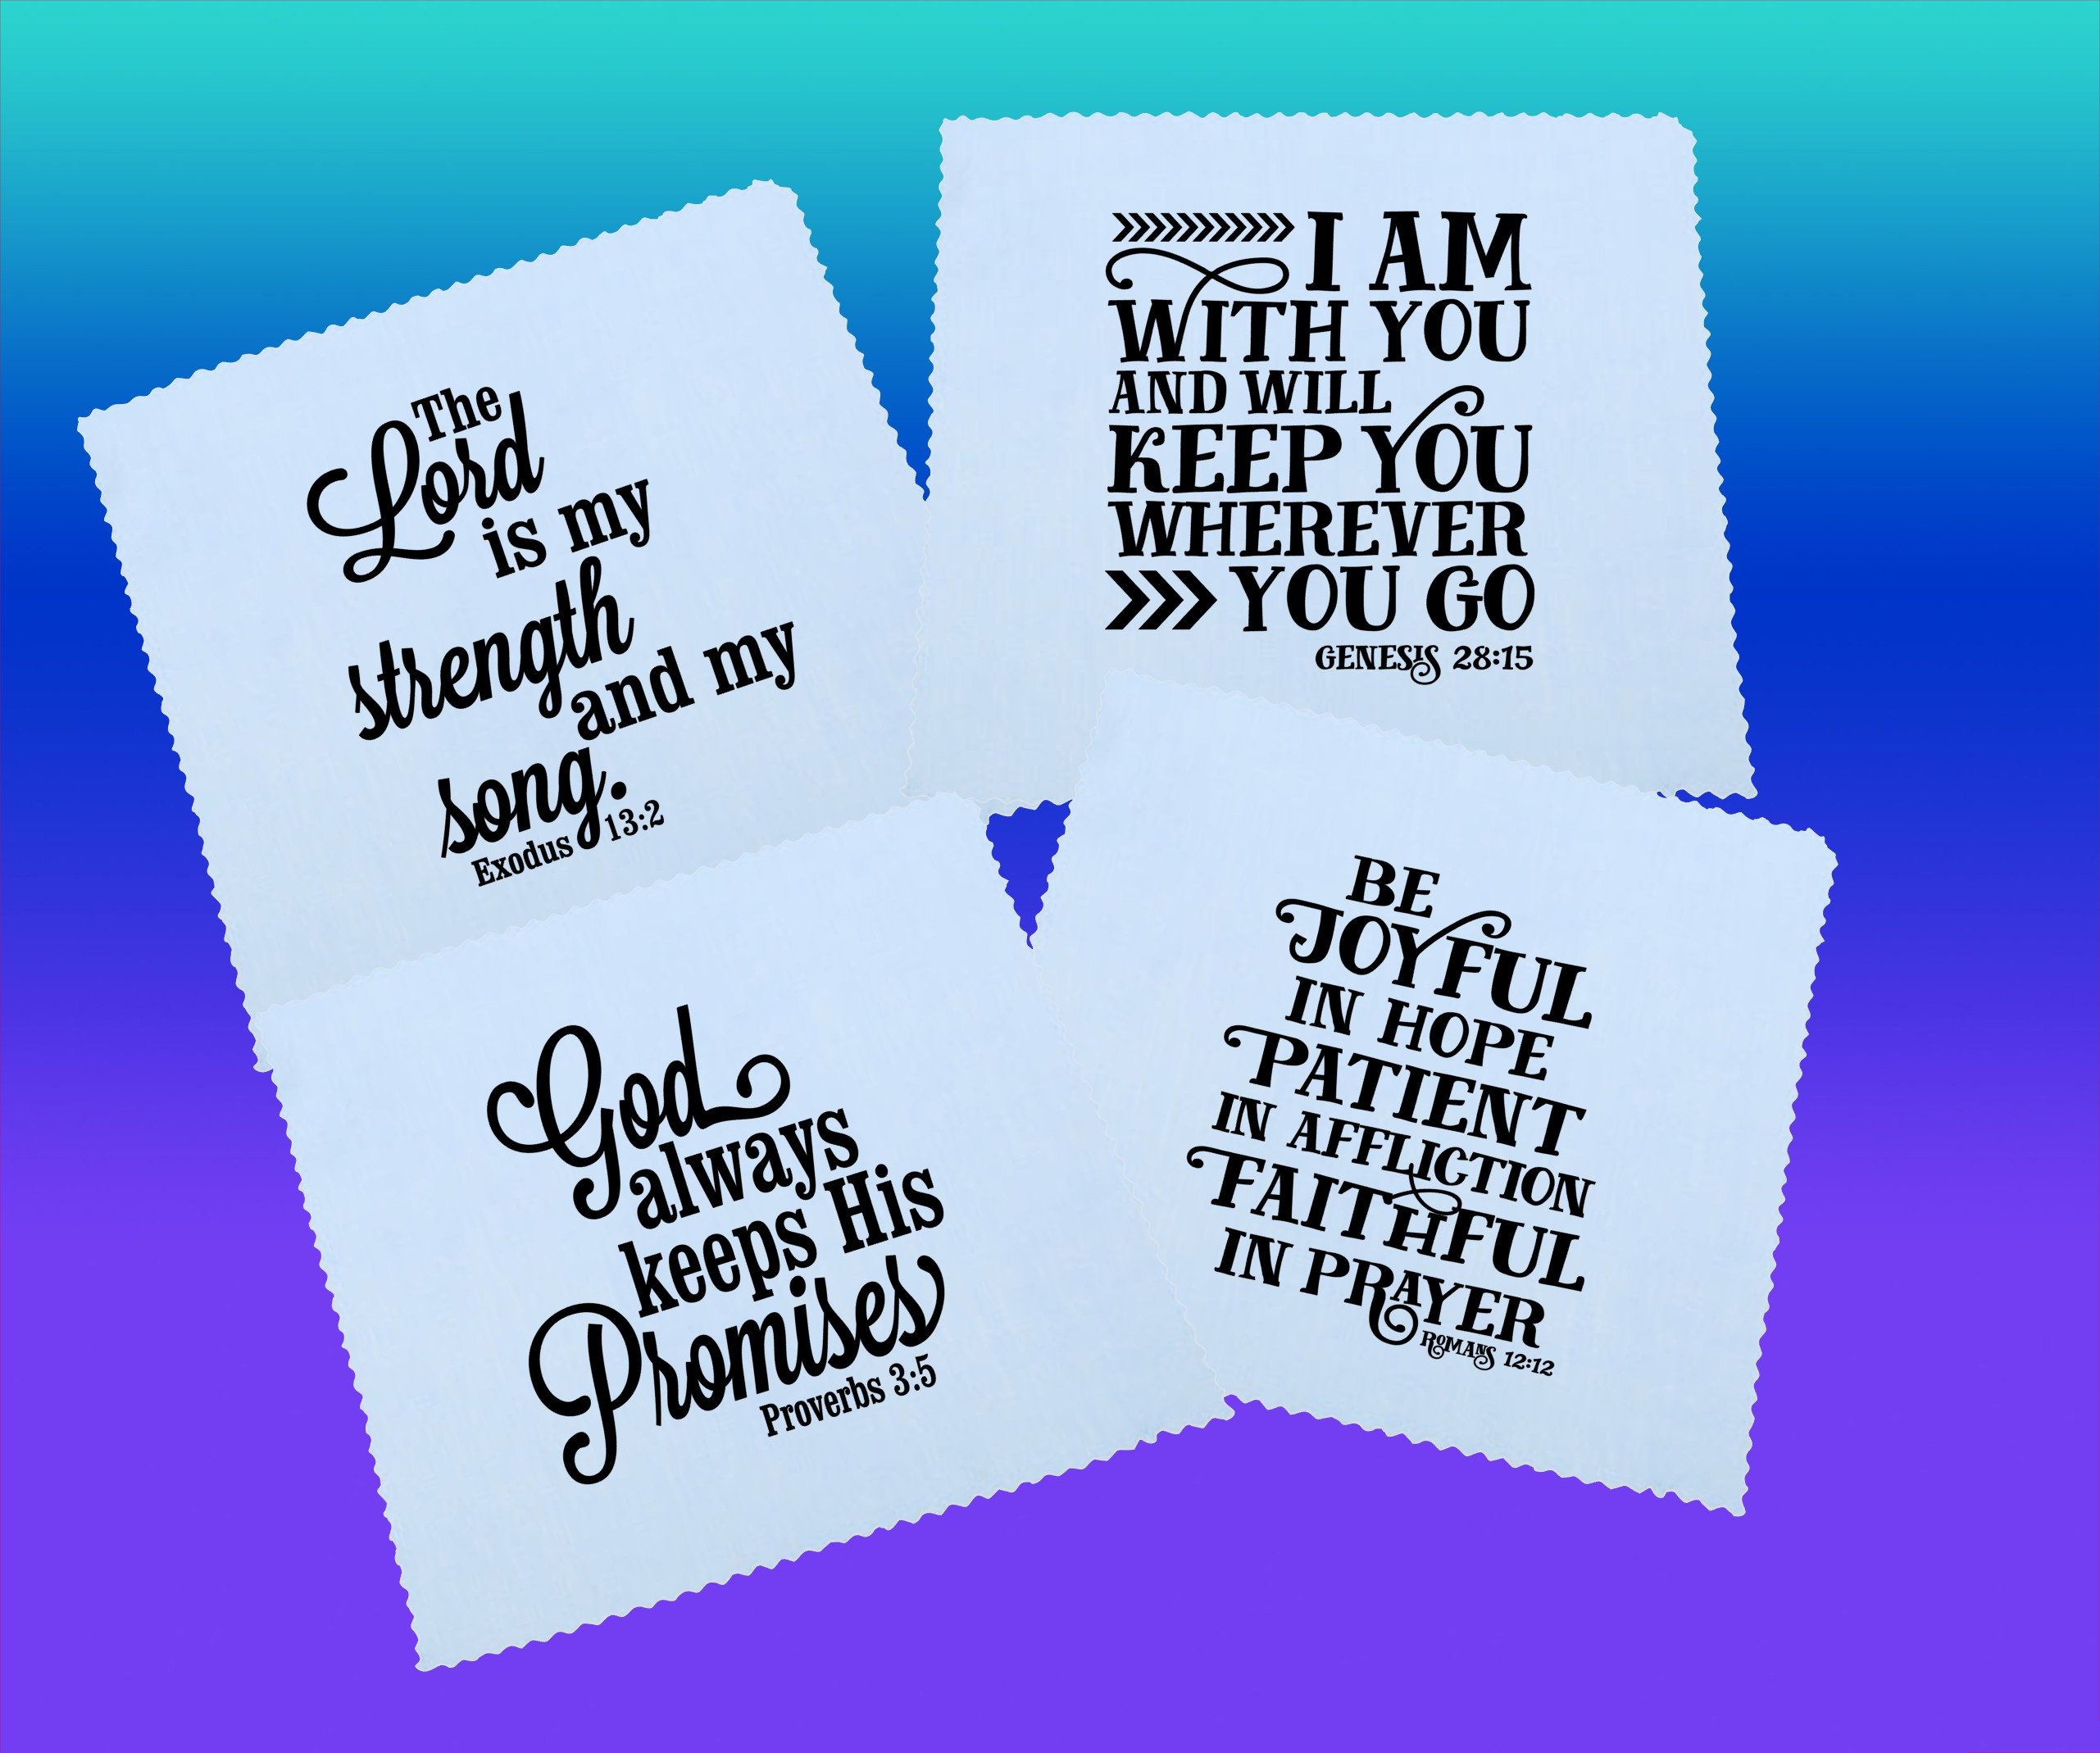 Printable Pocket Prayer Cards